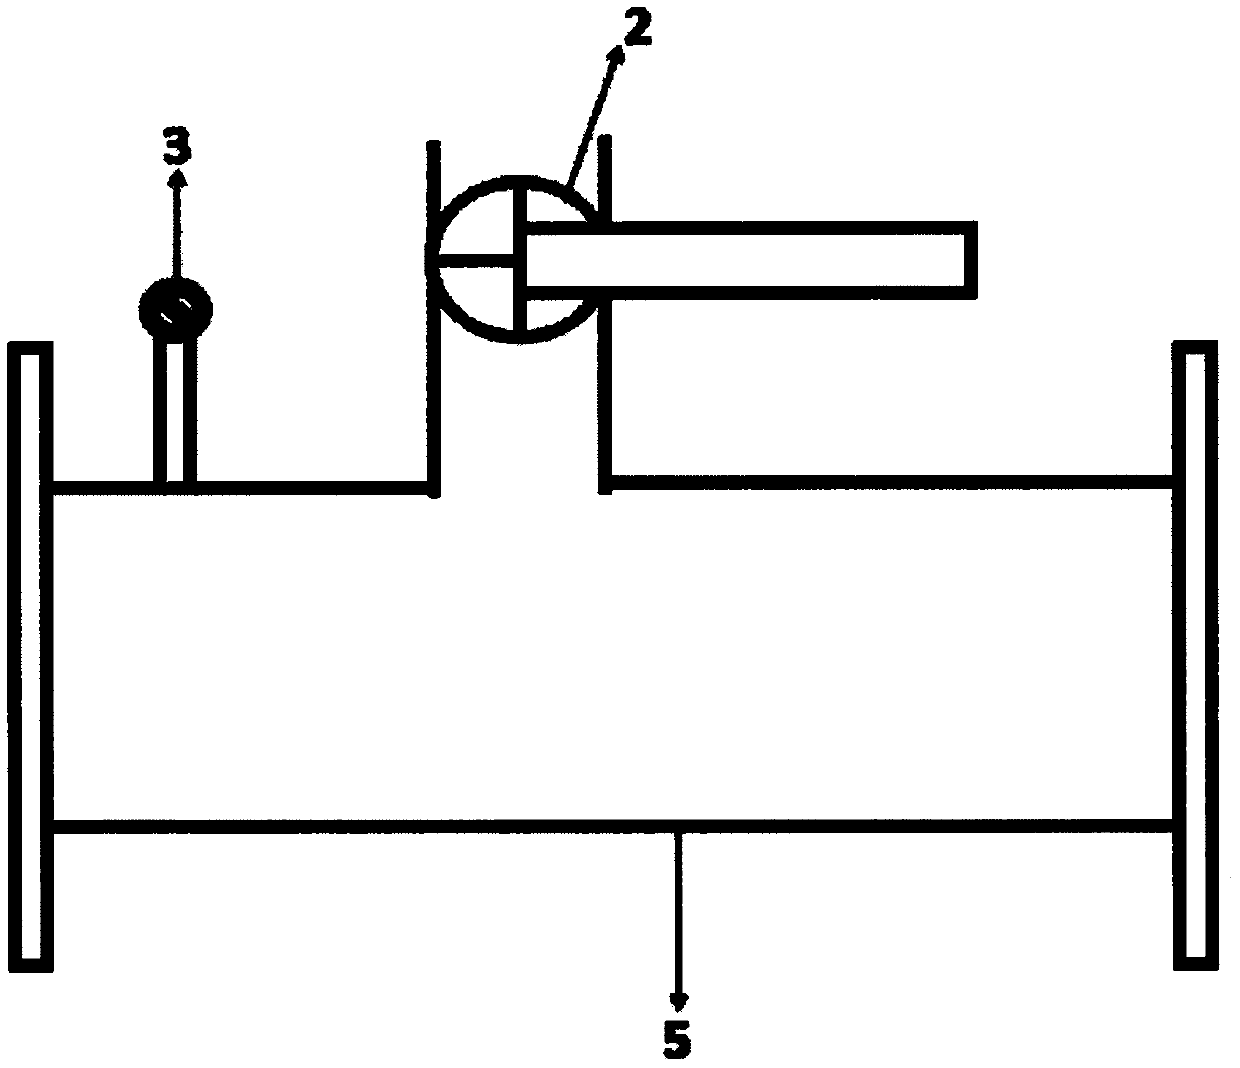 Liner tube feeding device and liner tube feeding method for horizontal drill hole under pressure